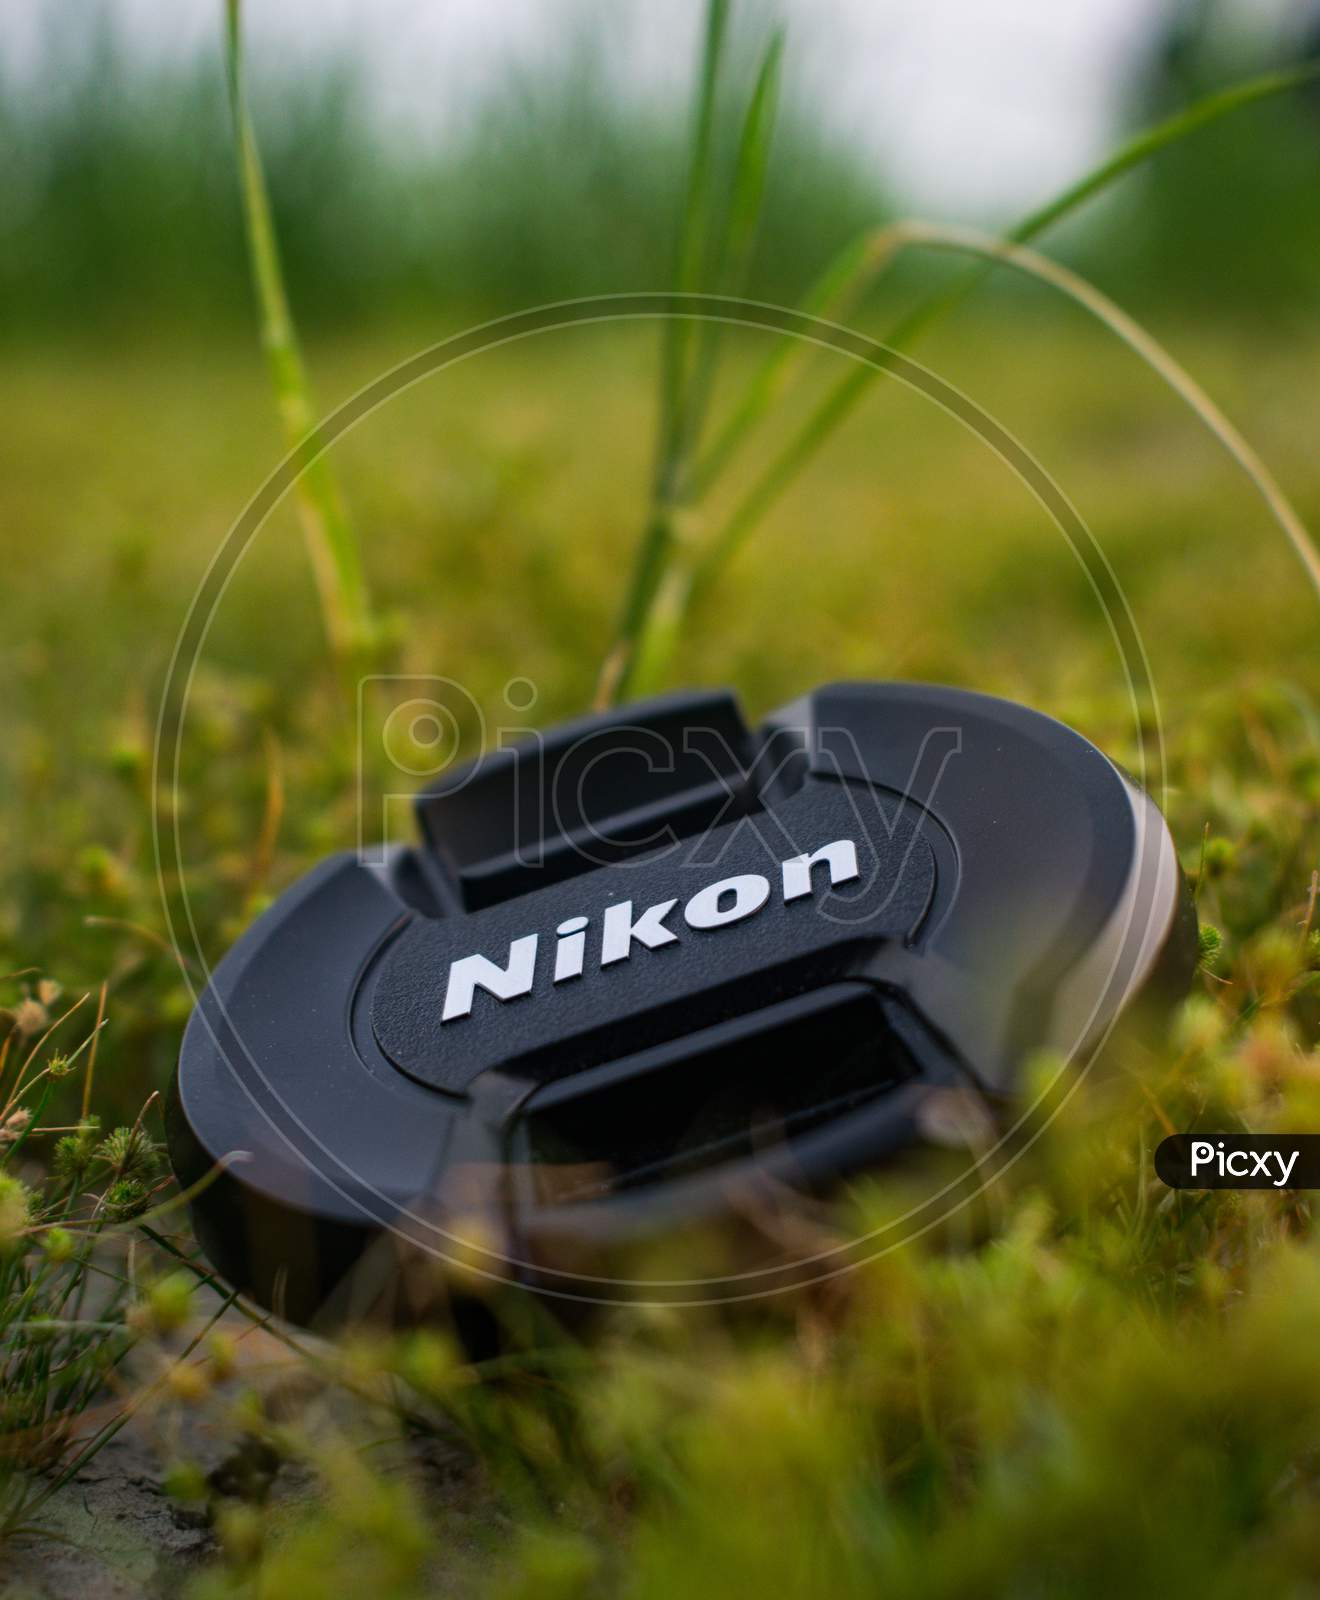 Nikon lens cap